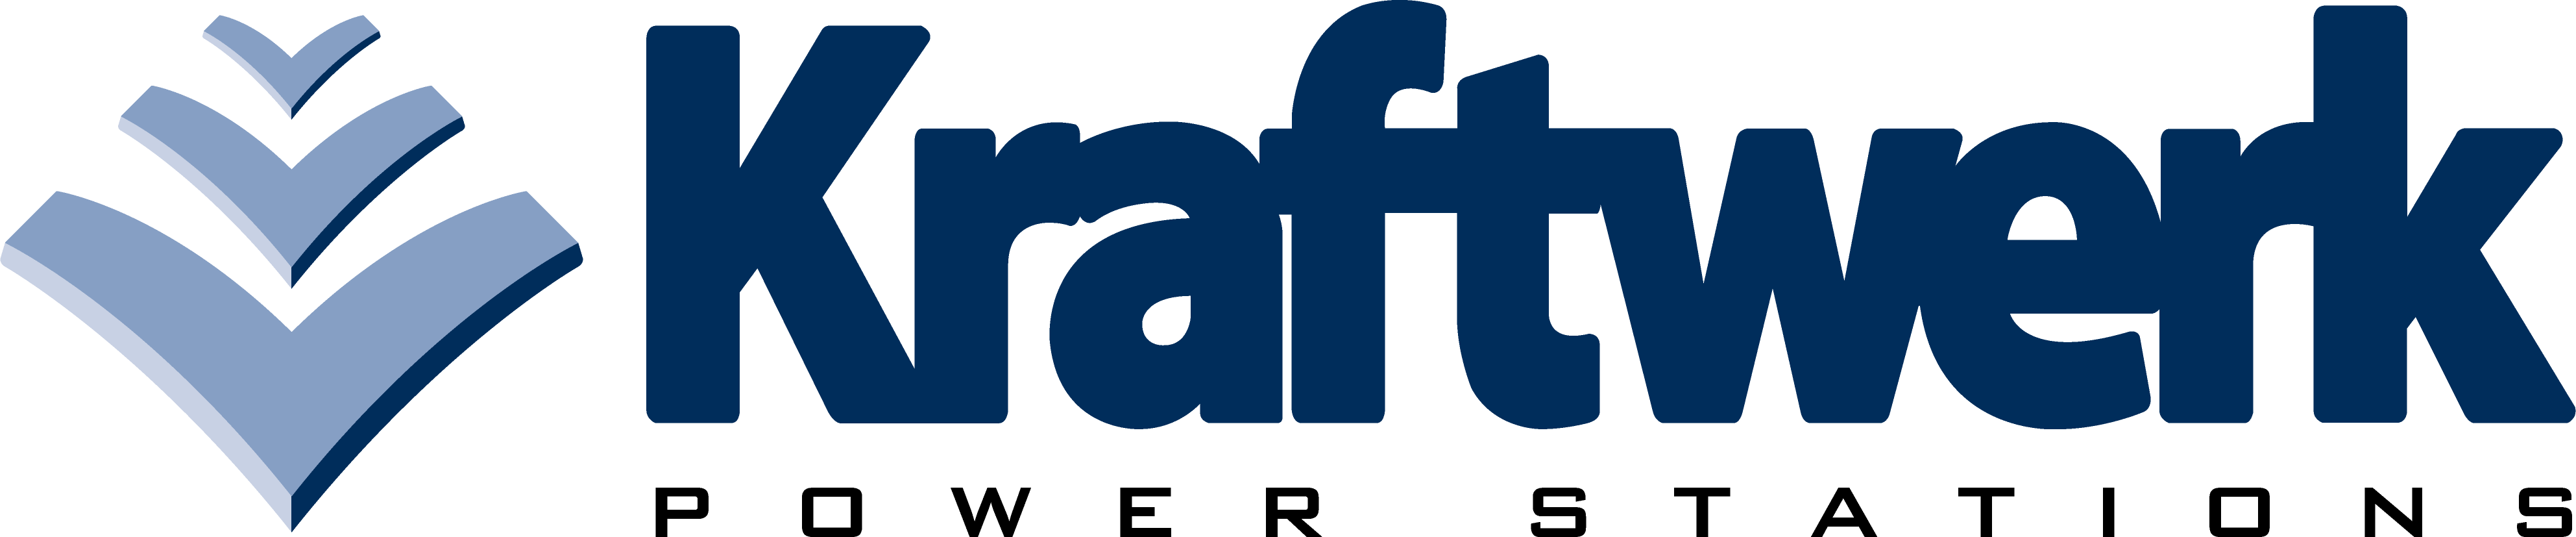 Kraftwerk Generators Company Logo